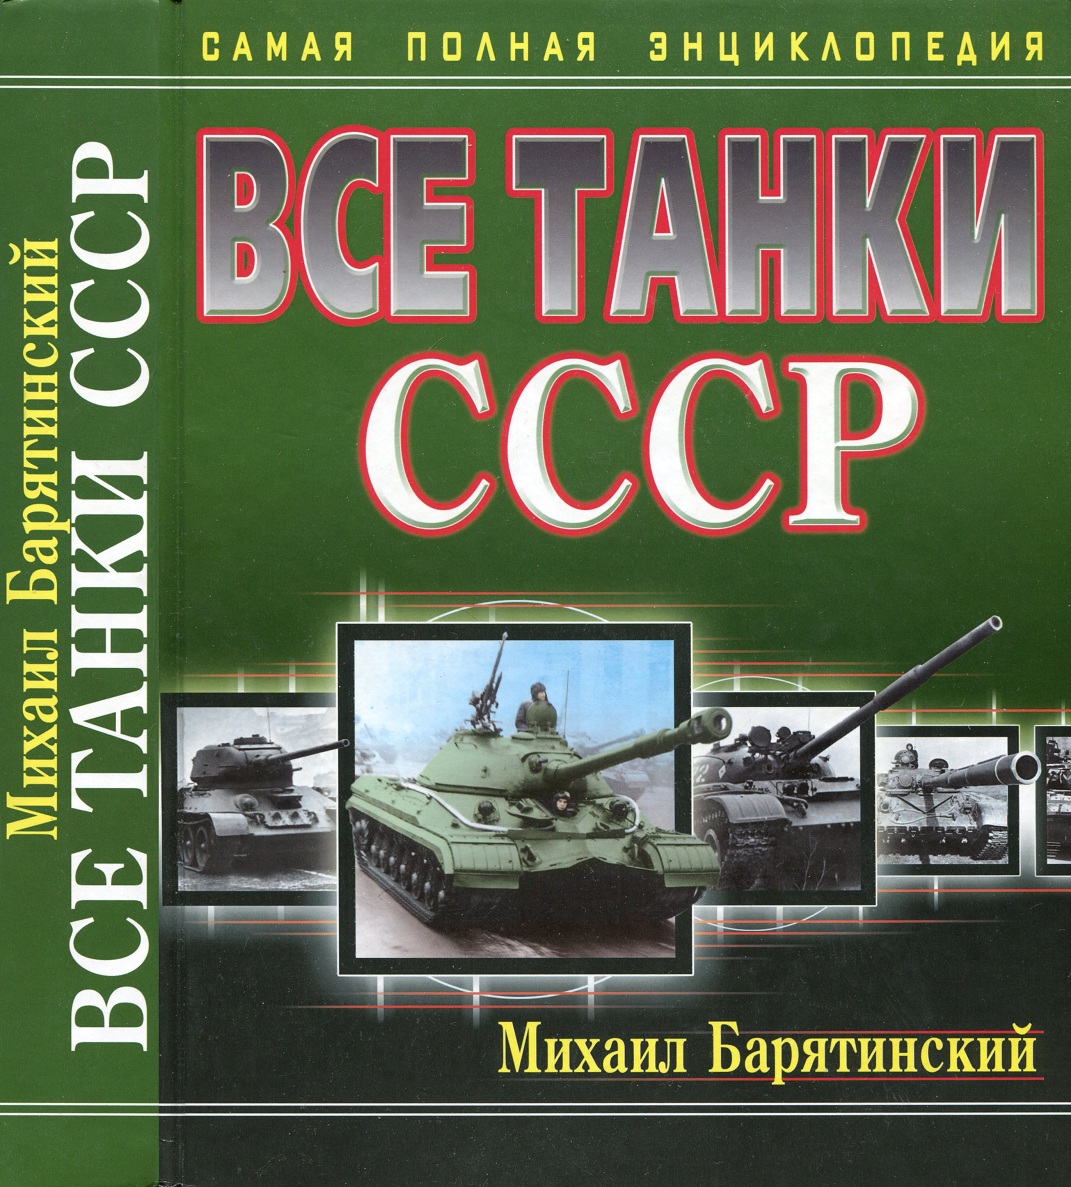 All_Tanks_of_the_USSR_HQ.jpg